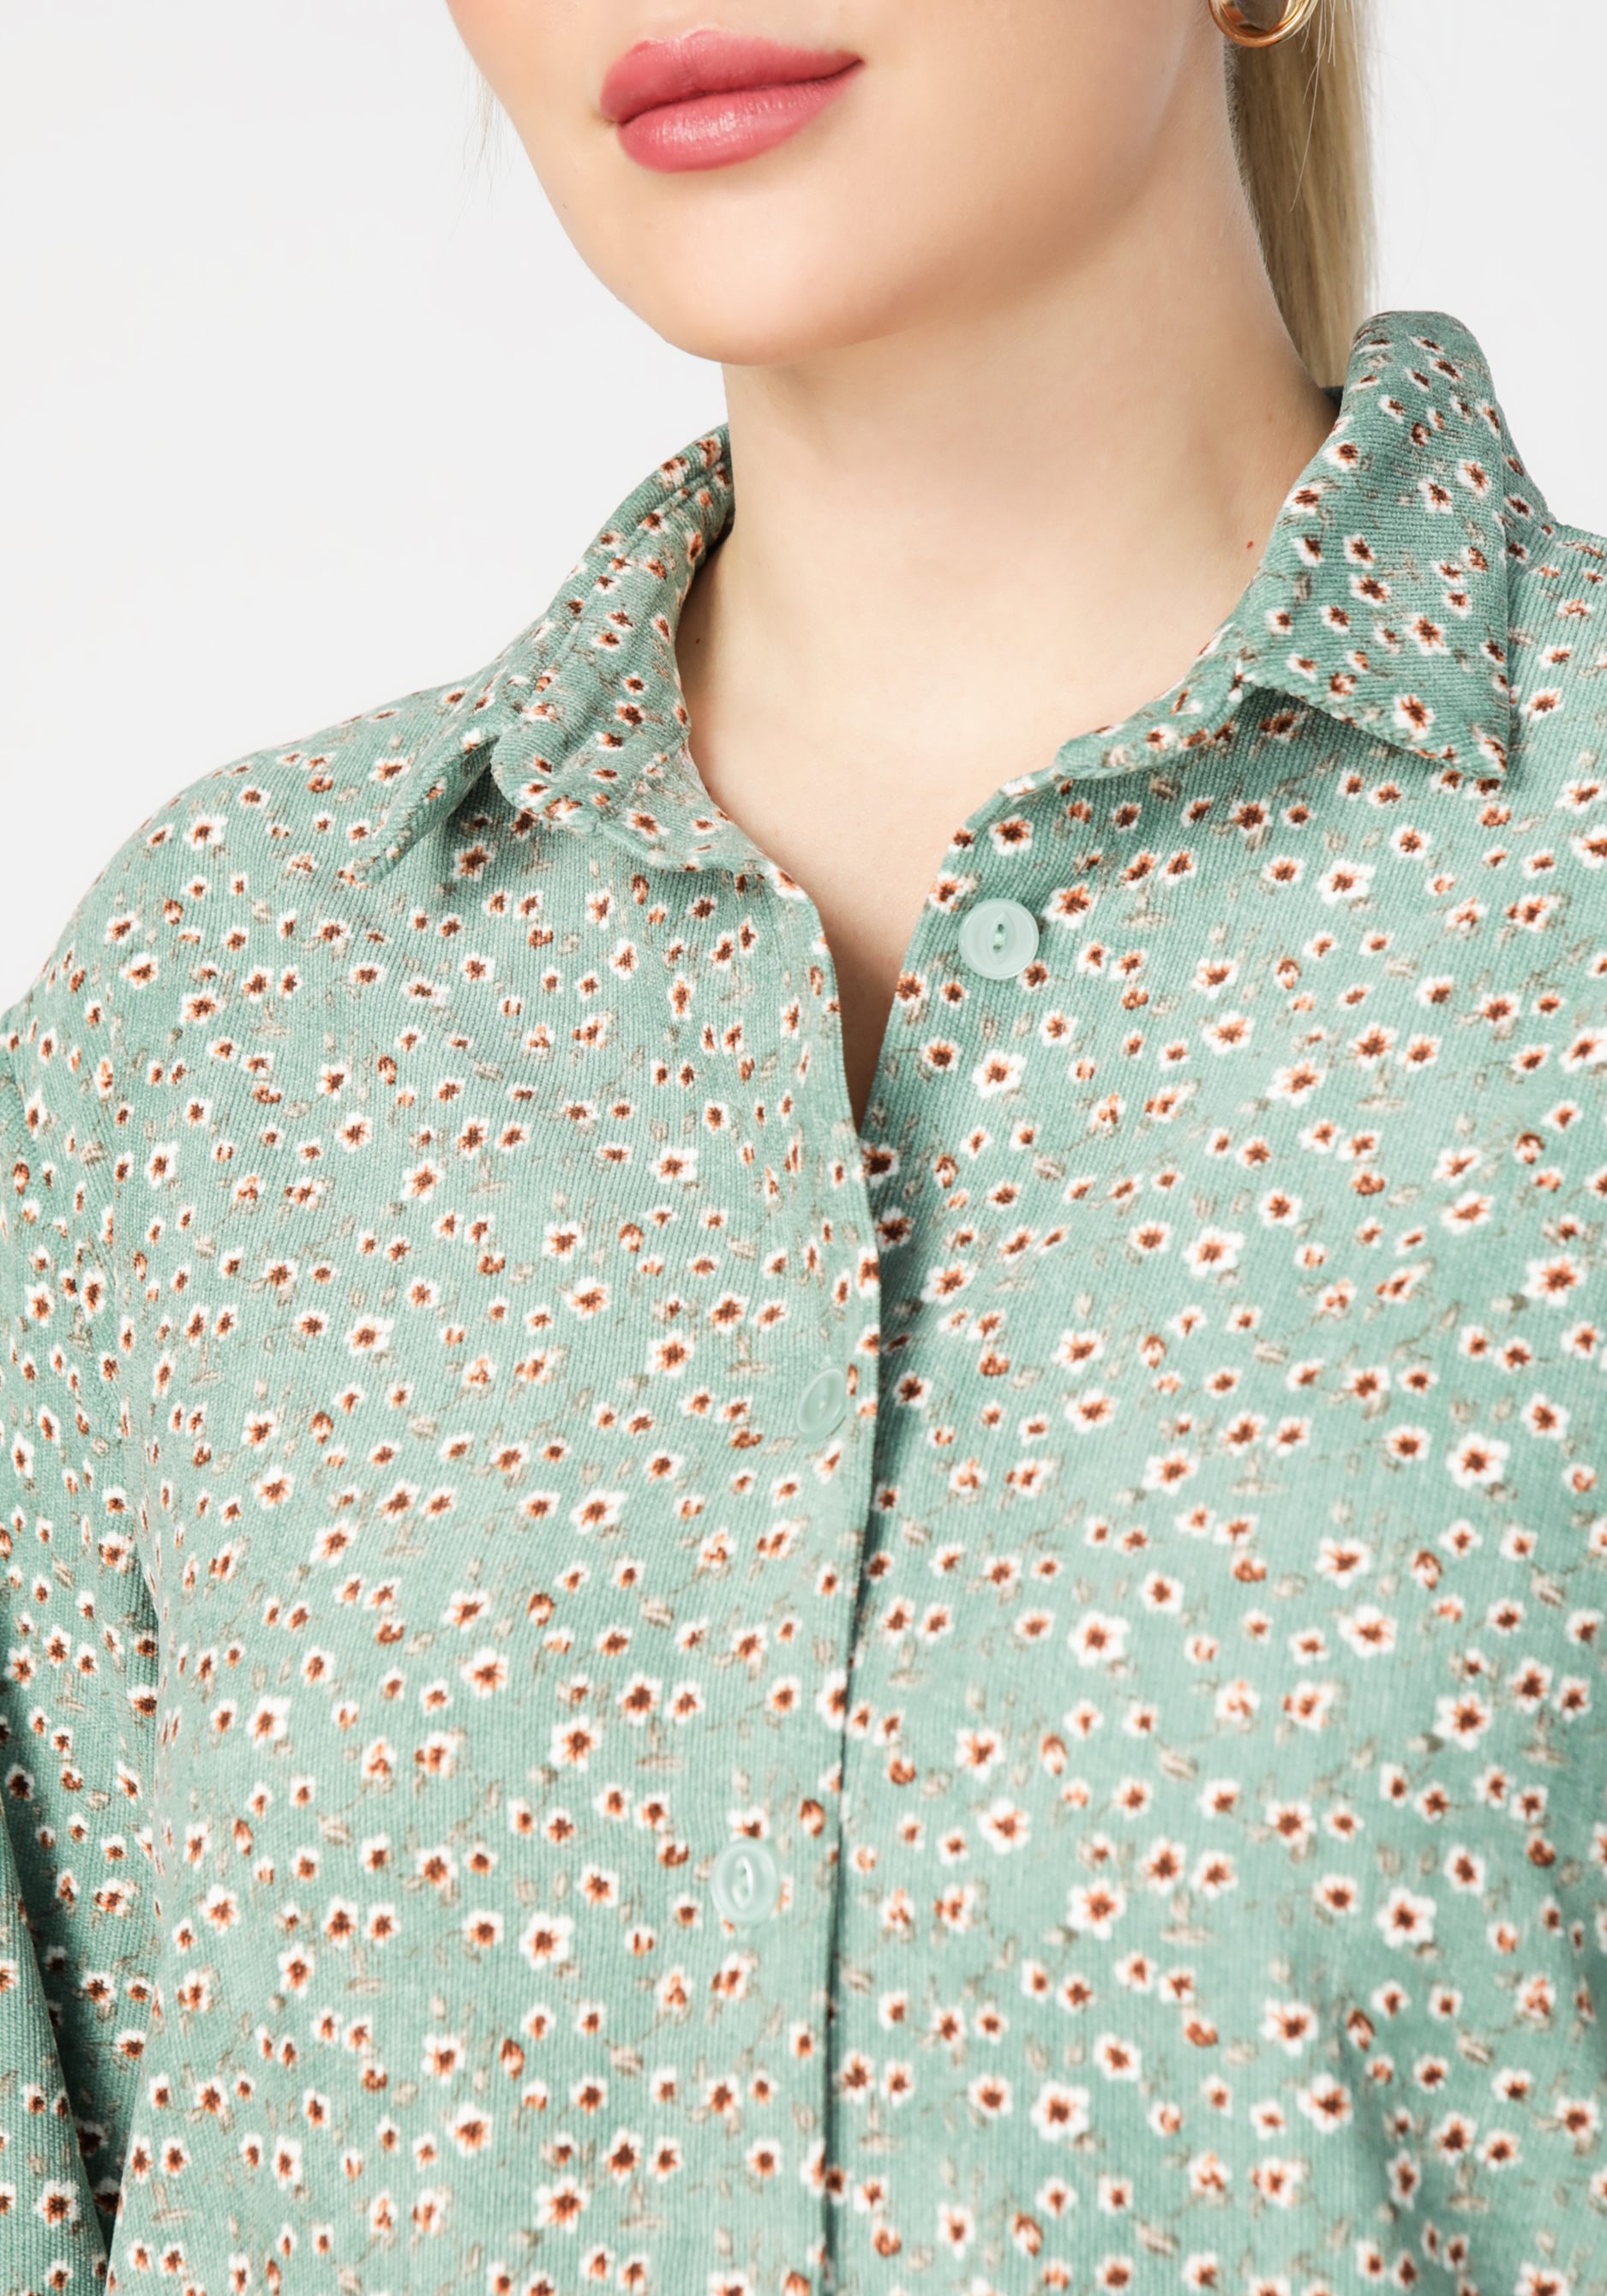 Рубашка "Чарующий взгляд", цвет зеленый, размер 46-48 - фото 9